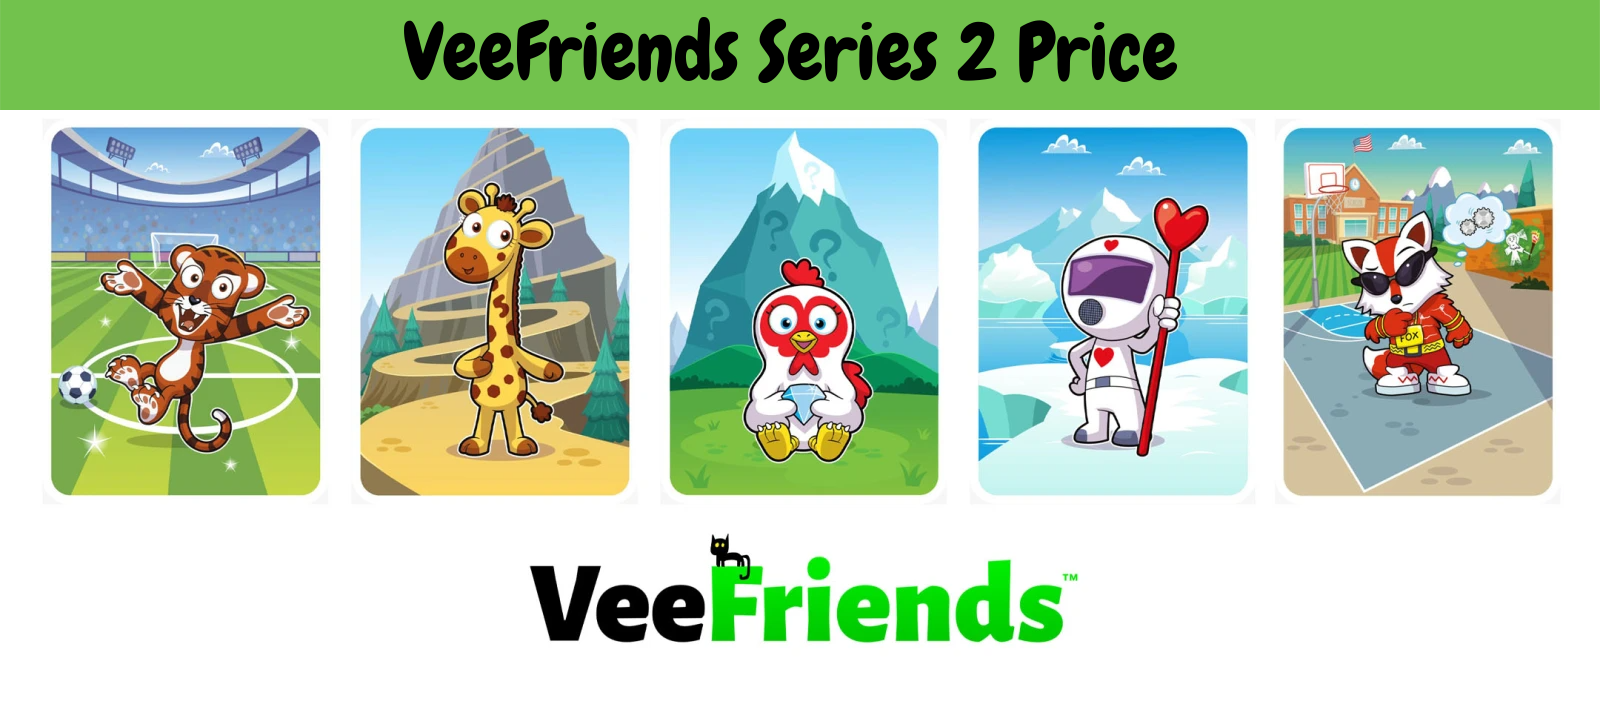 VeeFriends Series 2 Price 